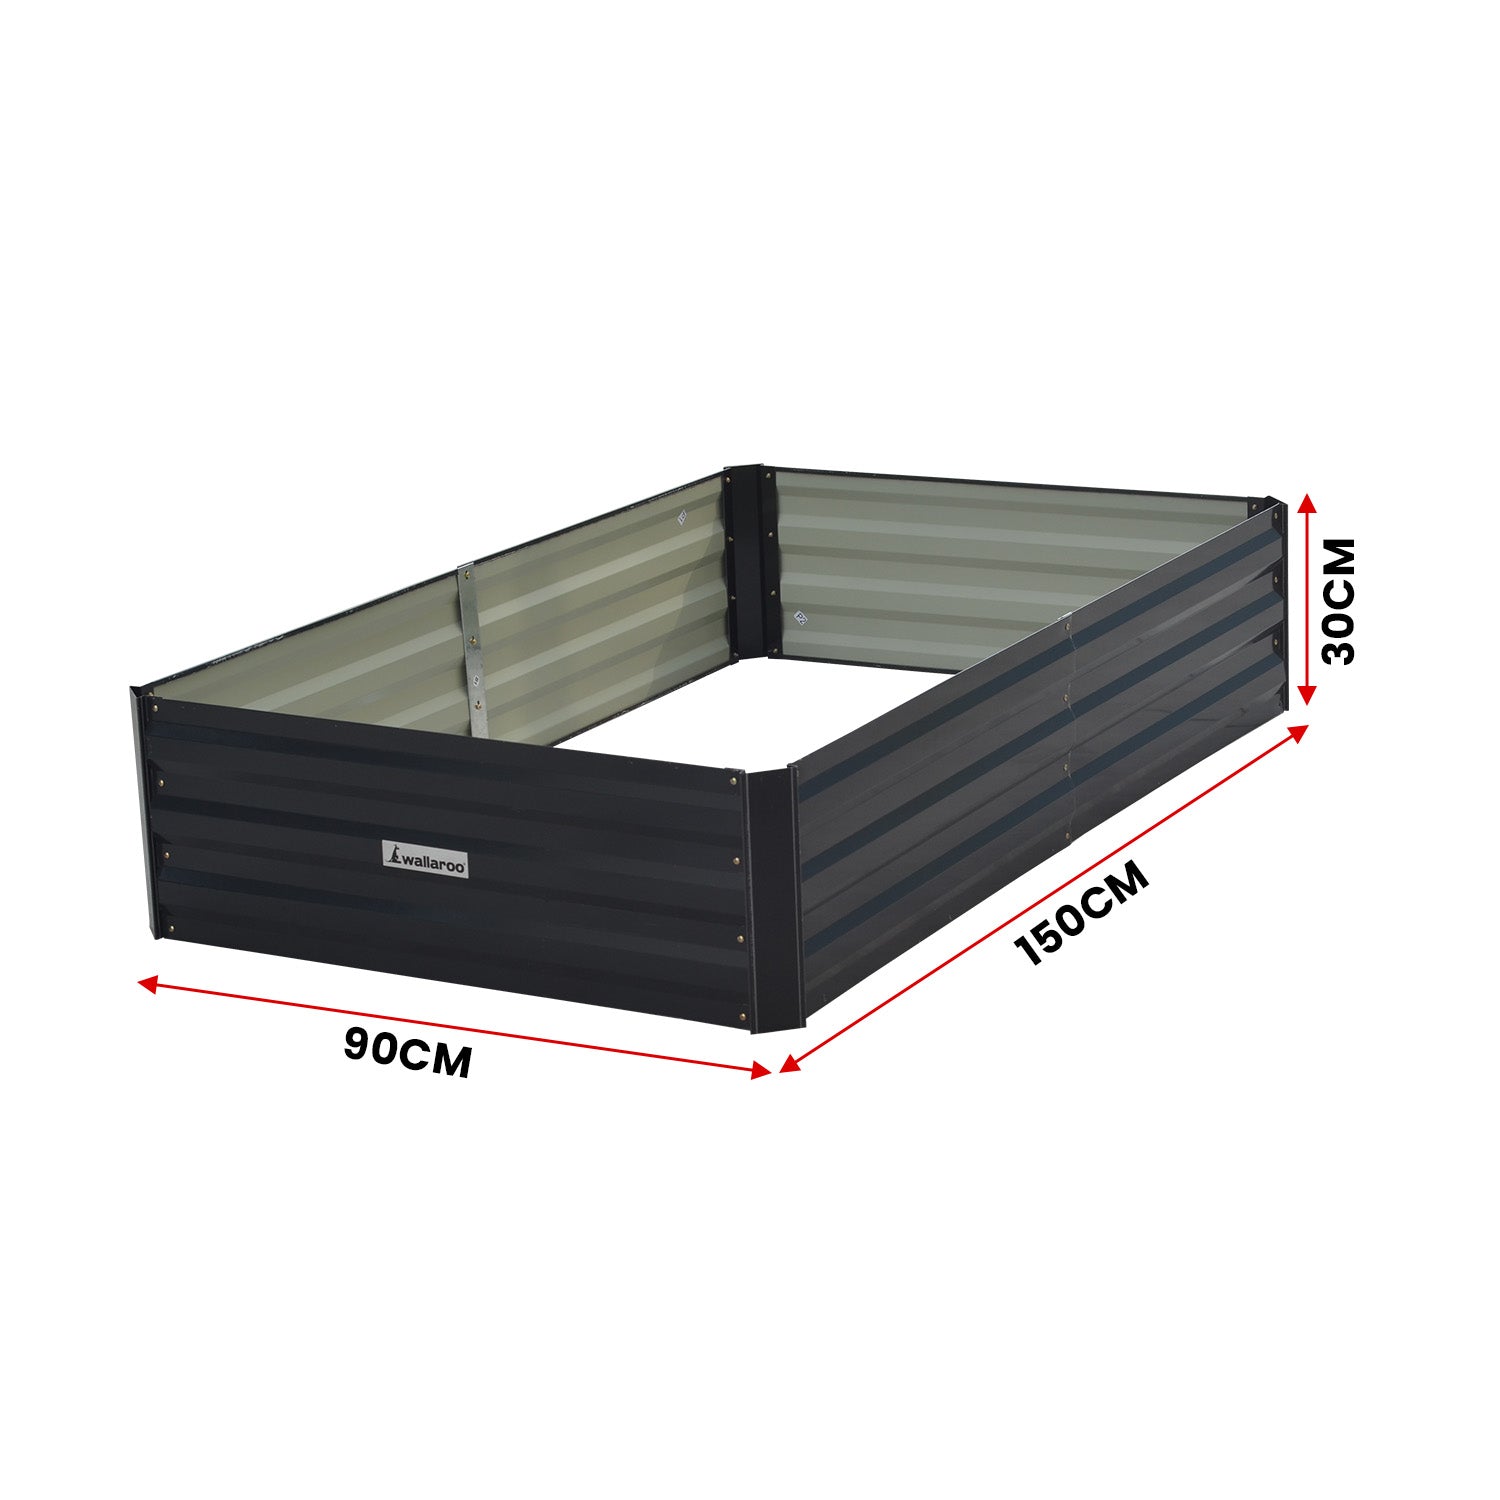 Wallaroo Galvanized Steel Garden Bed - Black 150 x 90 x 30cm